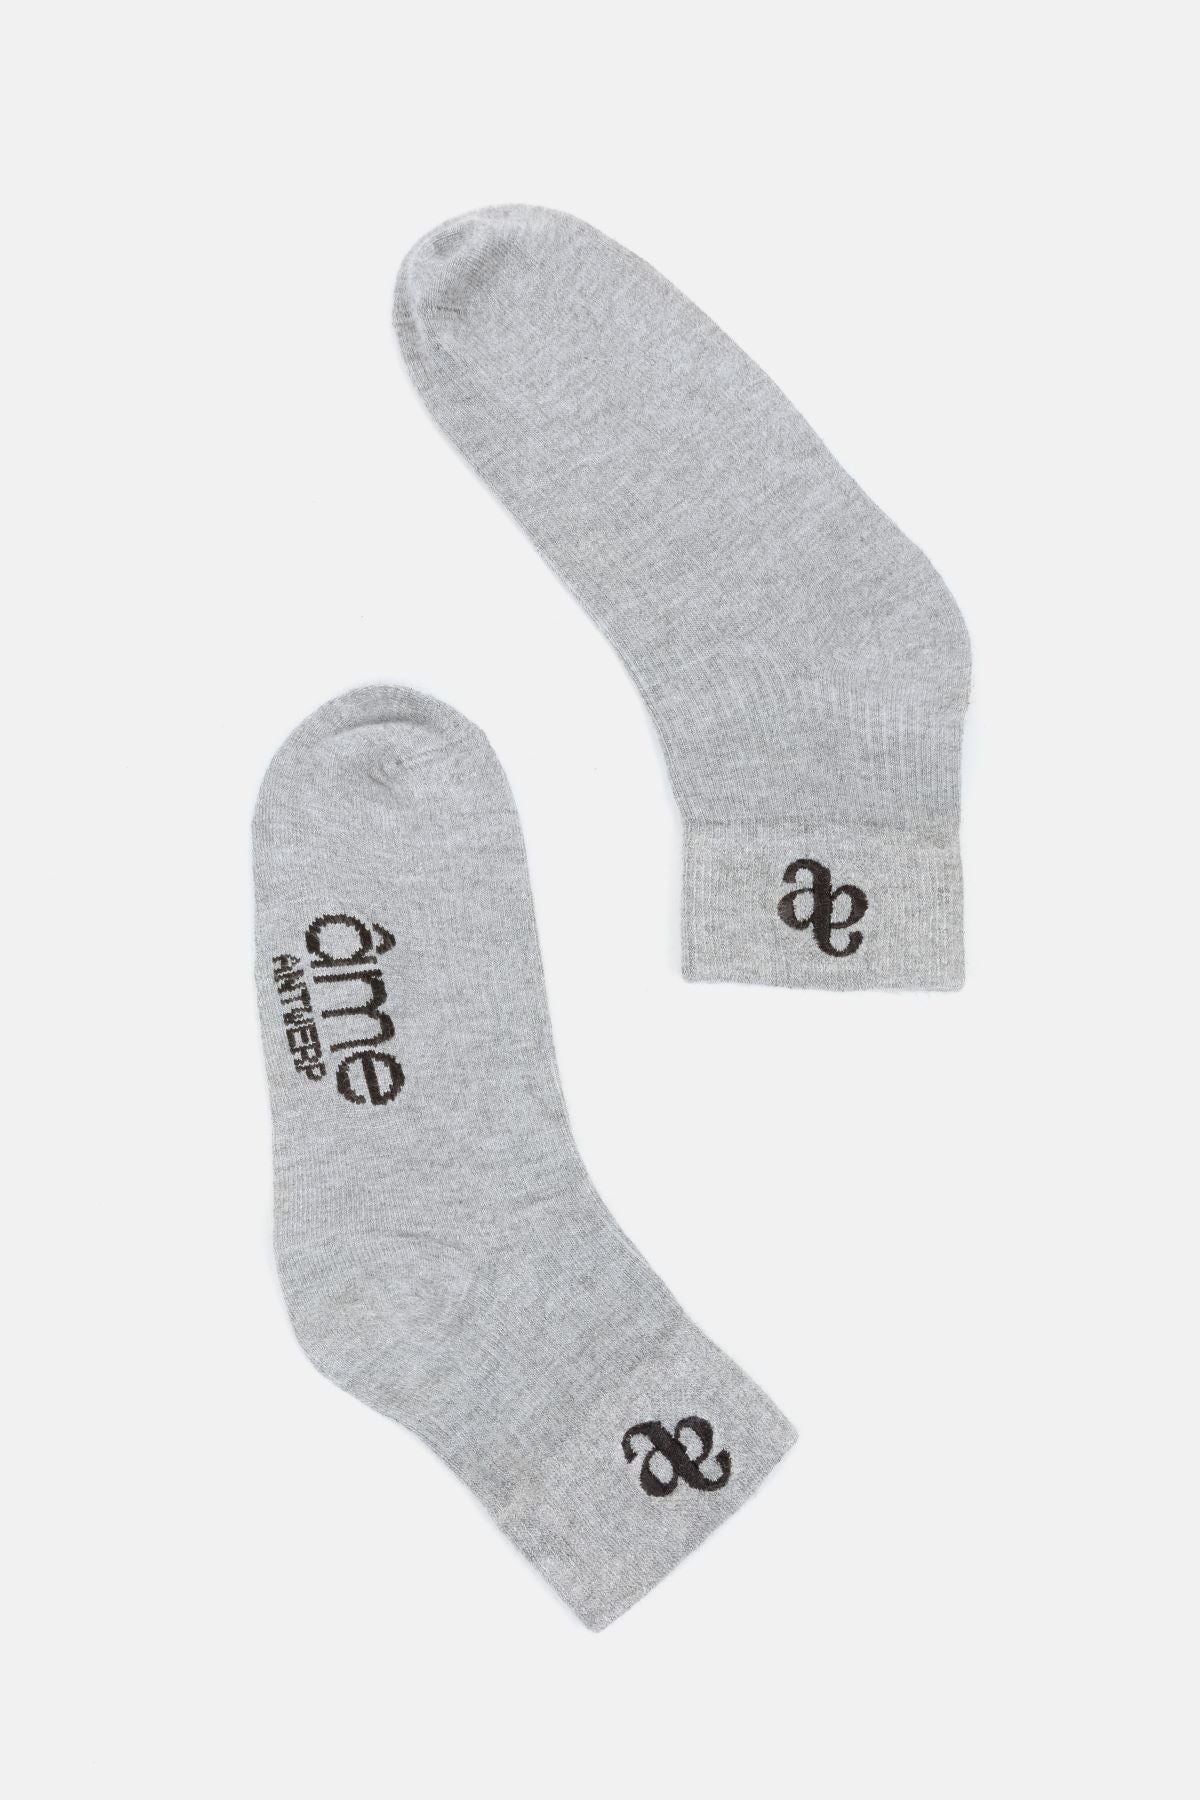 Madily Socks | Marled Grey